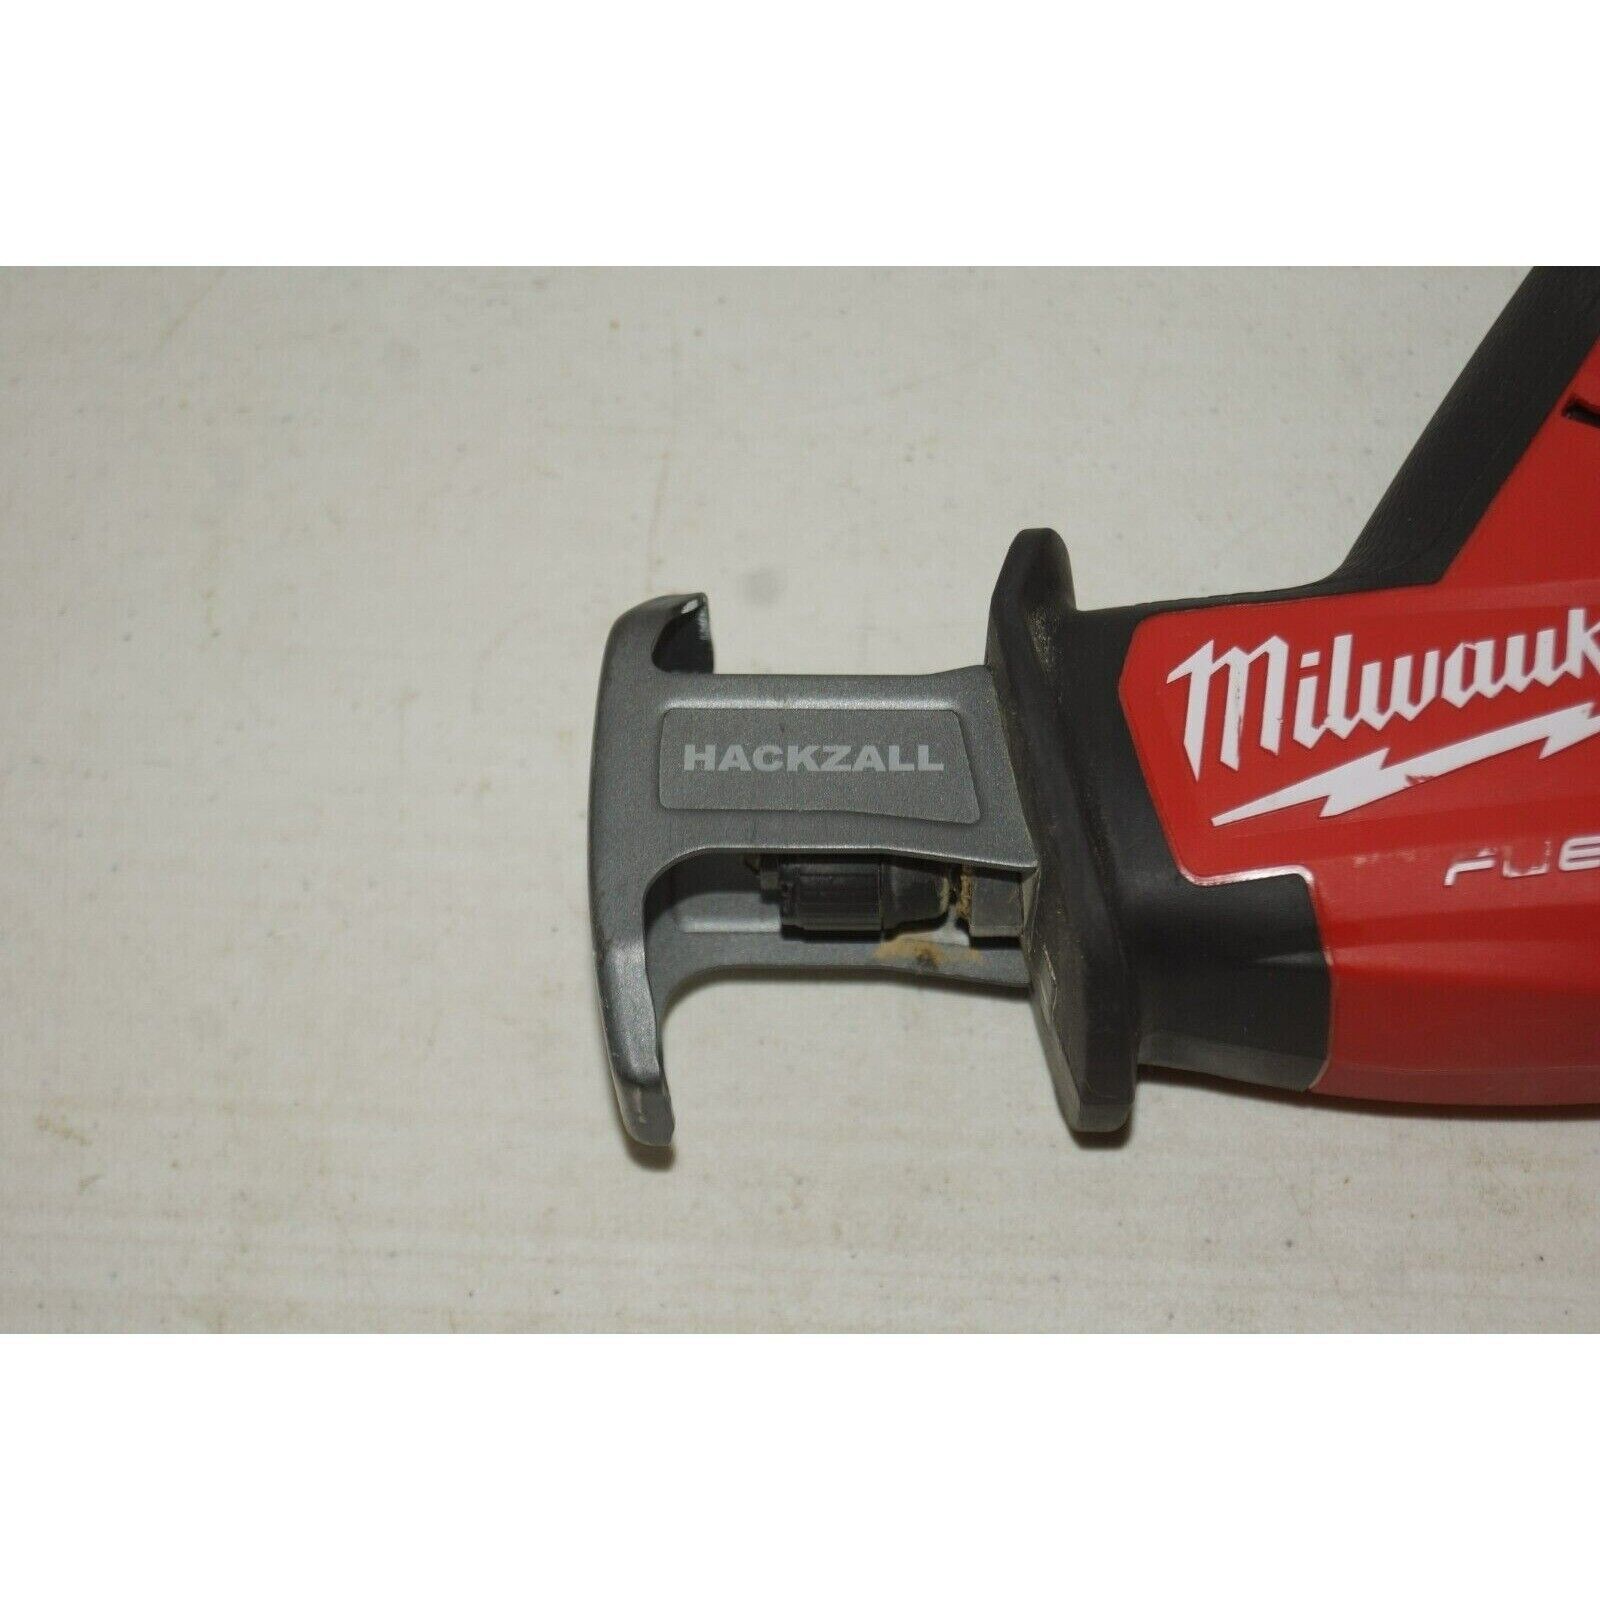 Milwaukee 2520-20 HACKZALL M12 Brushless and 15 similar items